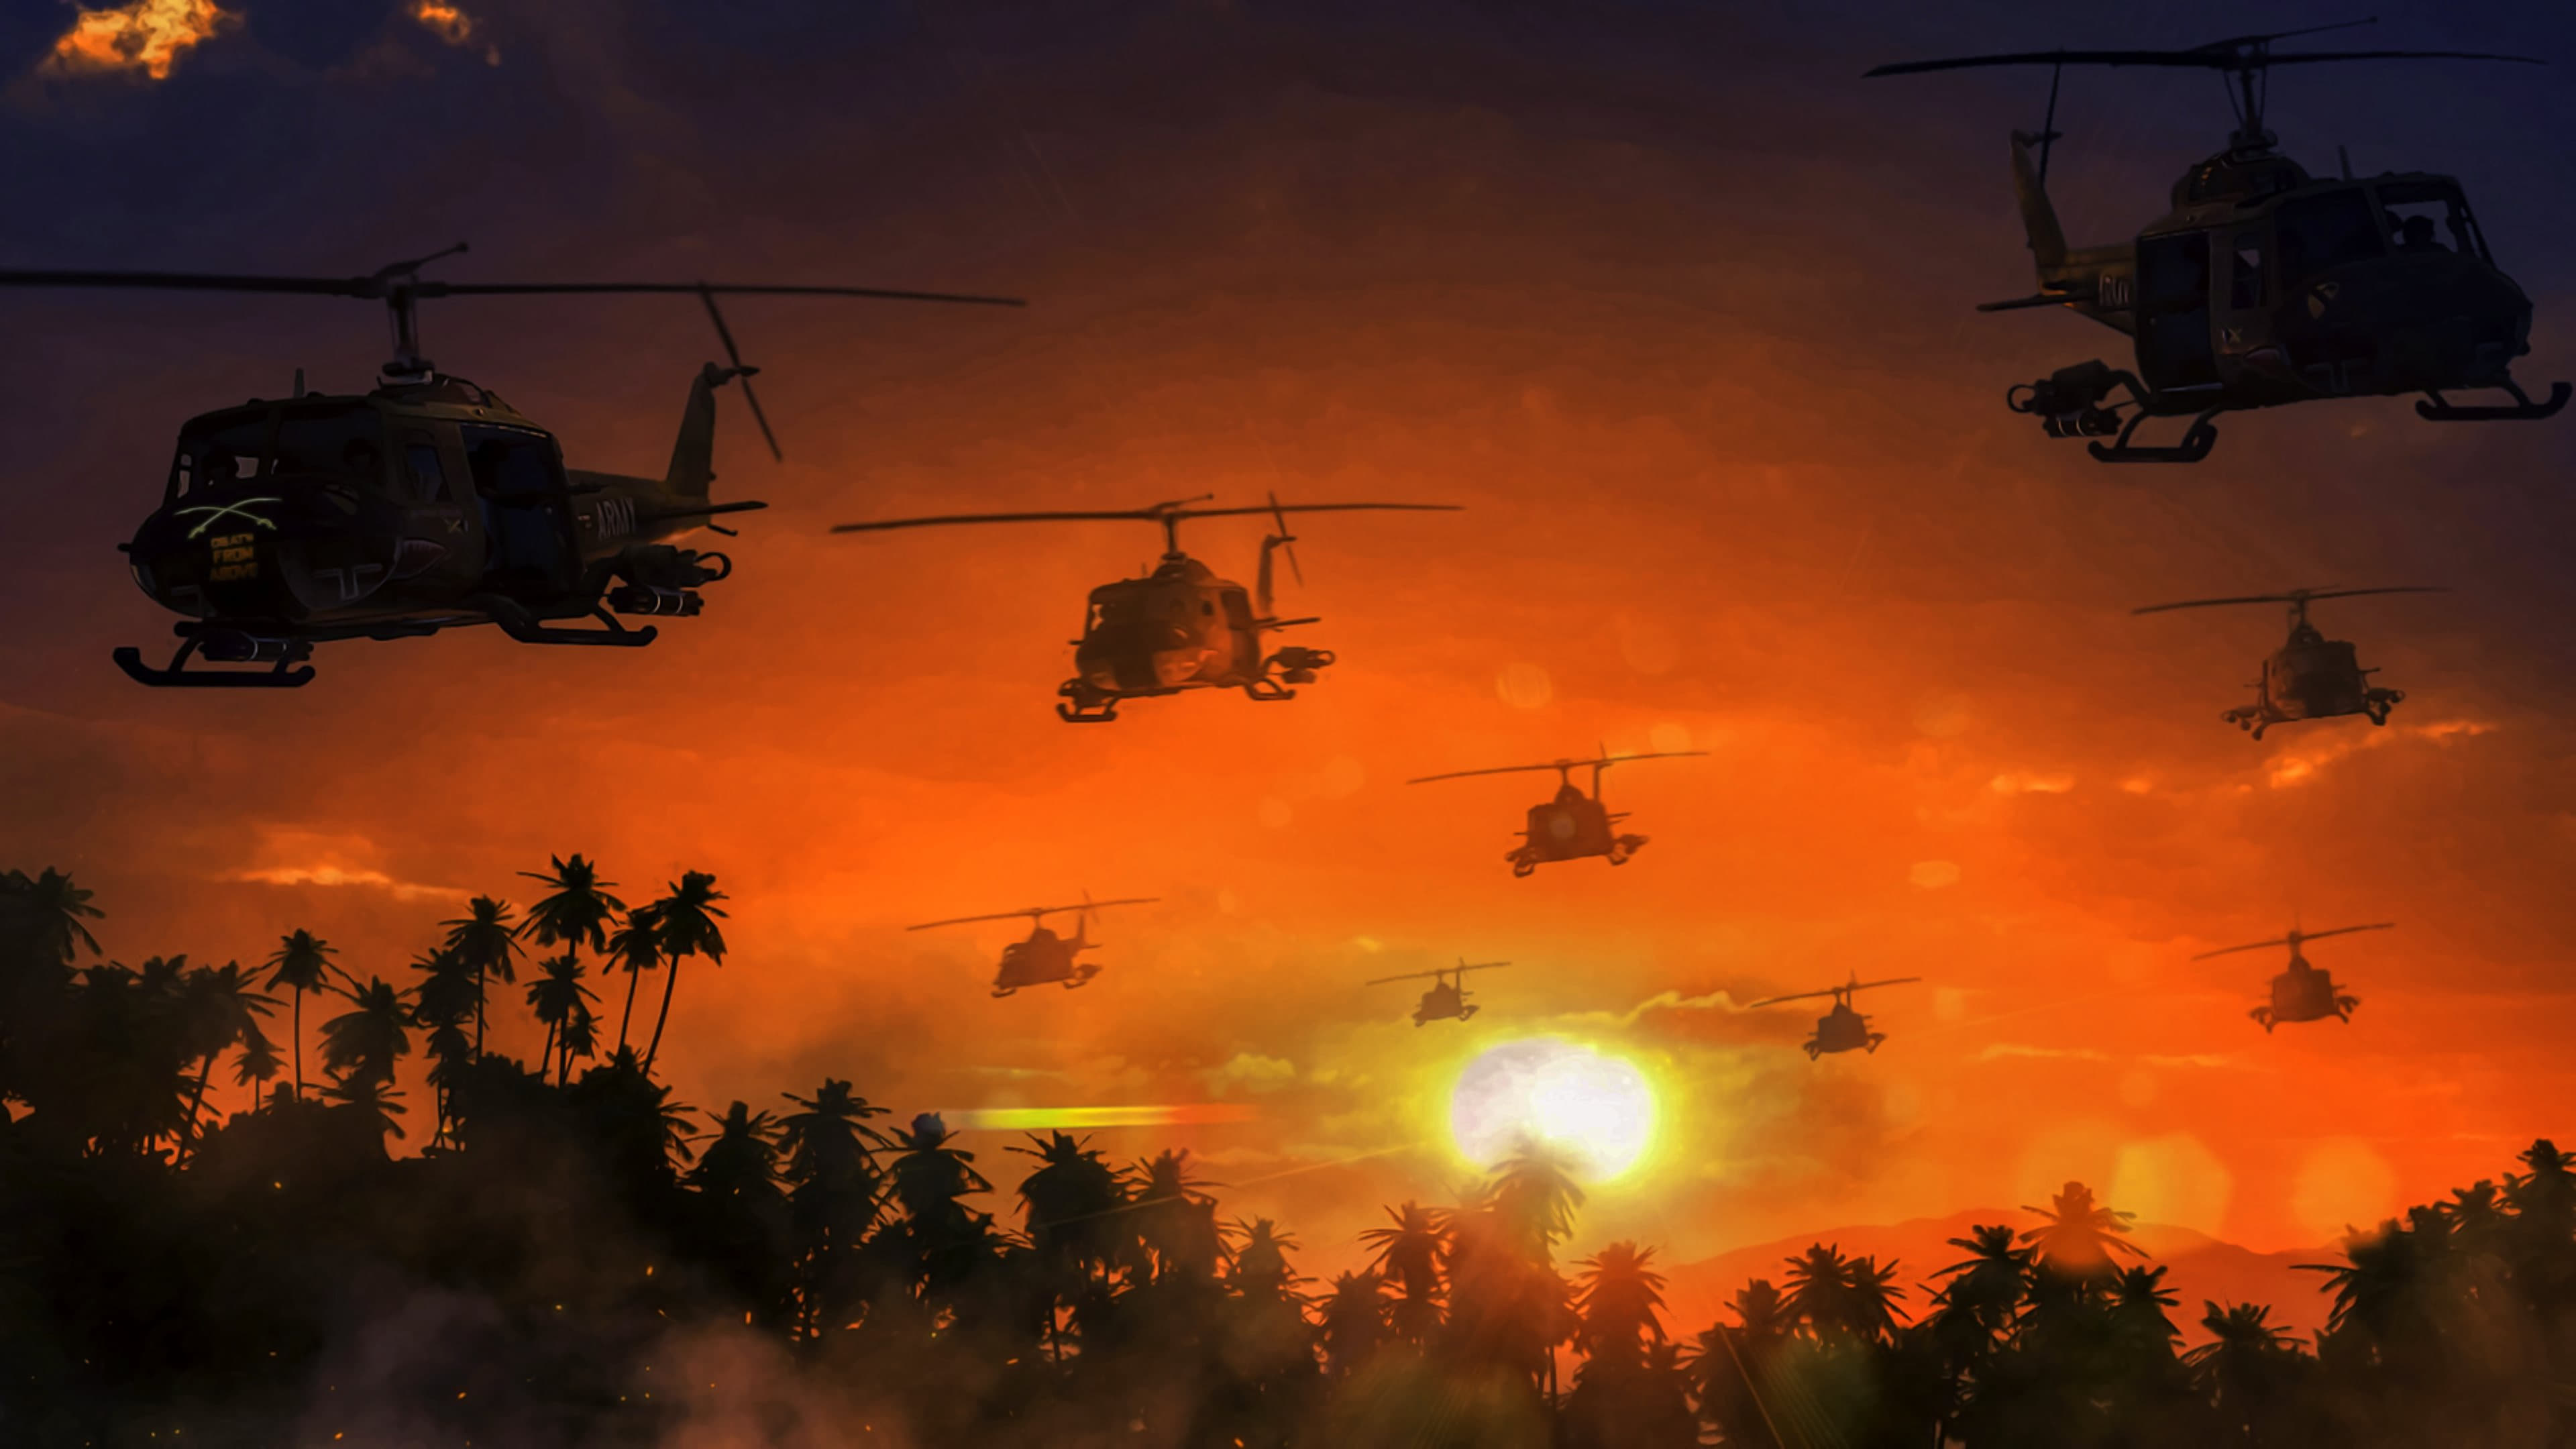 Image du film Apocalypse Now Final Cut 4dvxz8qgecxyh2s5oobyjjiquhxjpg